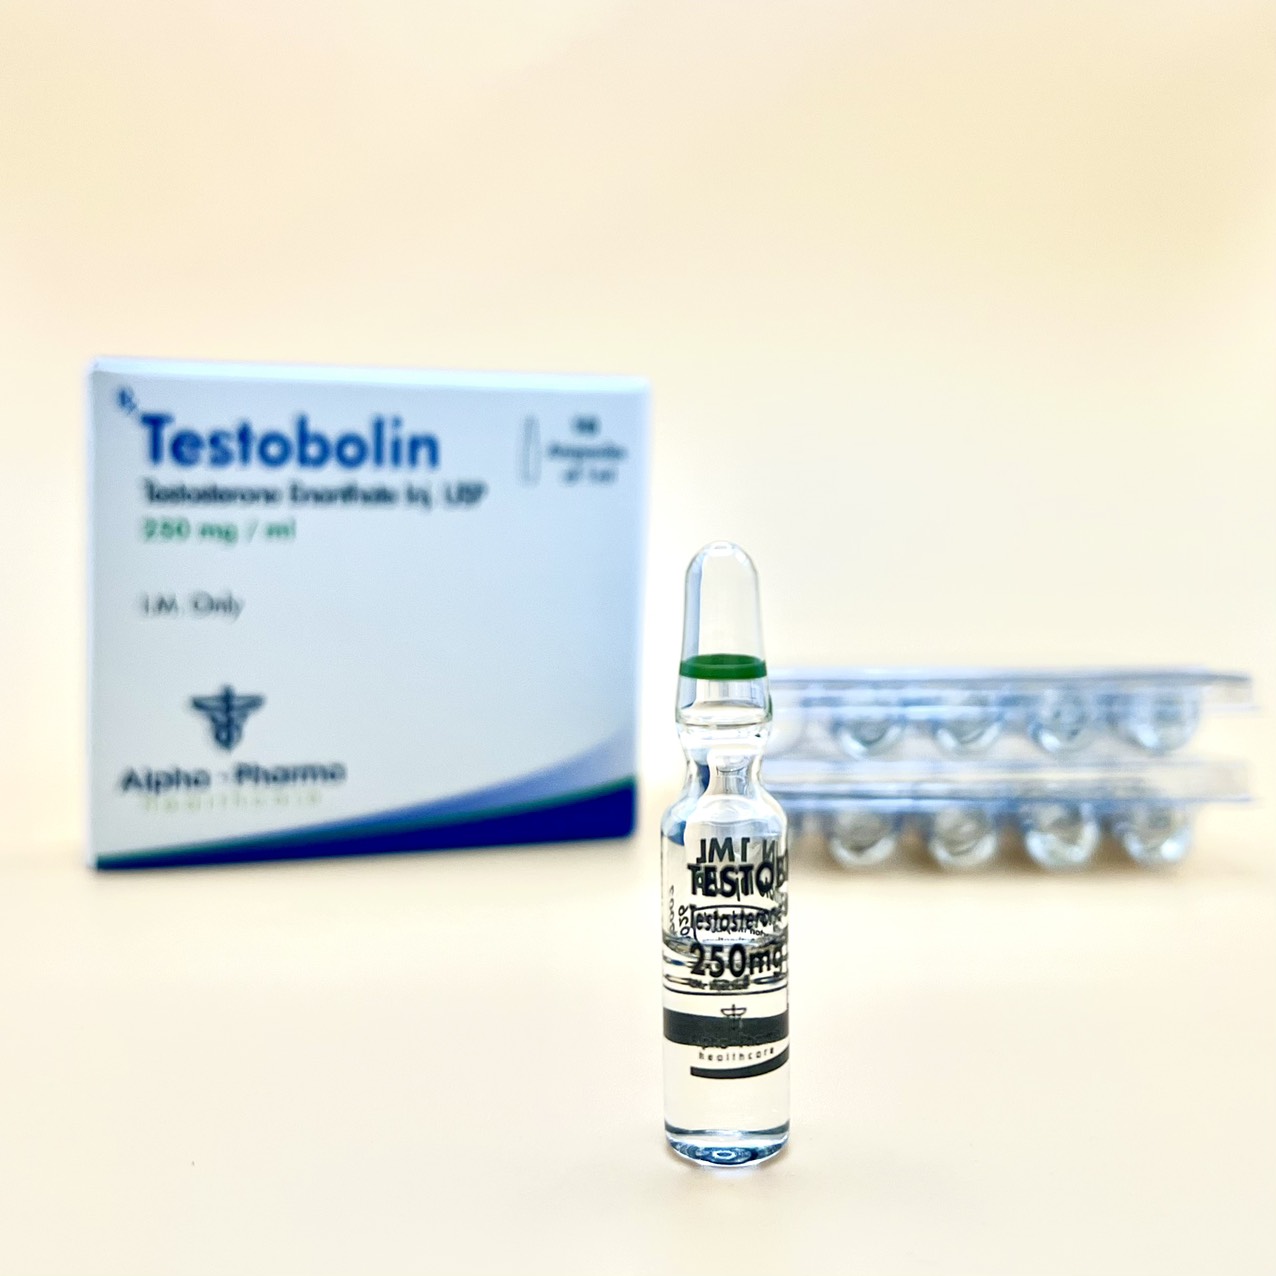 freeship-tu-5-ong-testobolin-testosterone-enantate-test-e-hang-alpha-pharma-lo-1